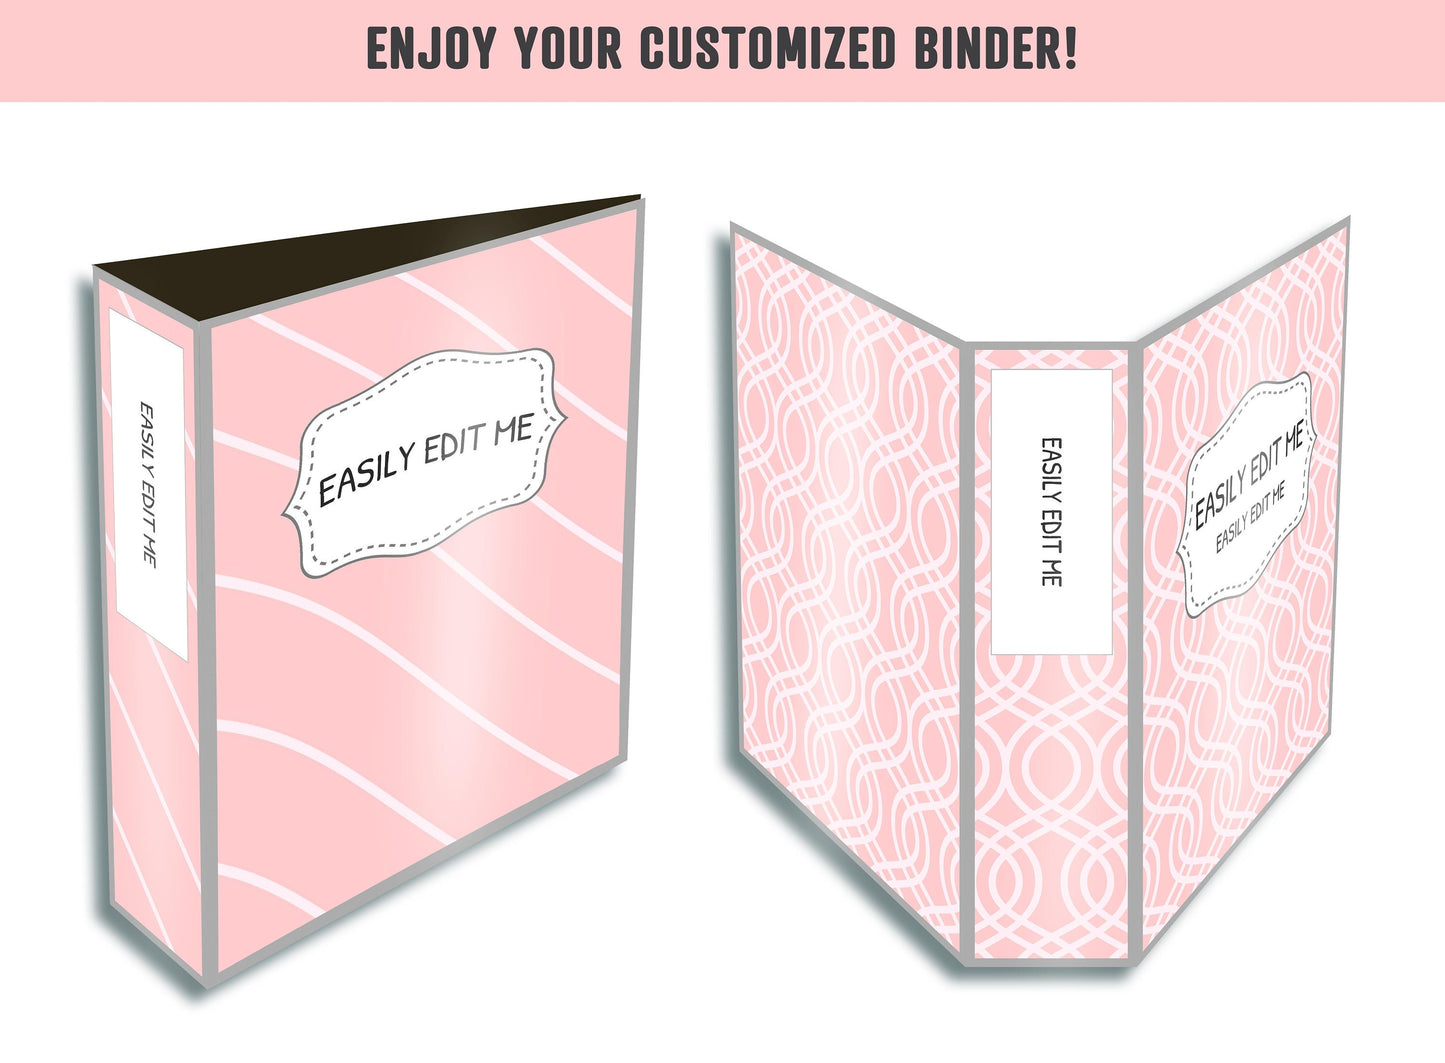 Pink Binder Cover, 10 Printable & Editable Covers+Spines, Binder Insert, Planner Cover, Teacher/School Binder Cover, Printable Binder Cover